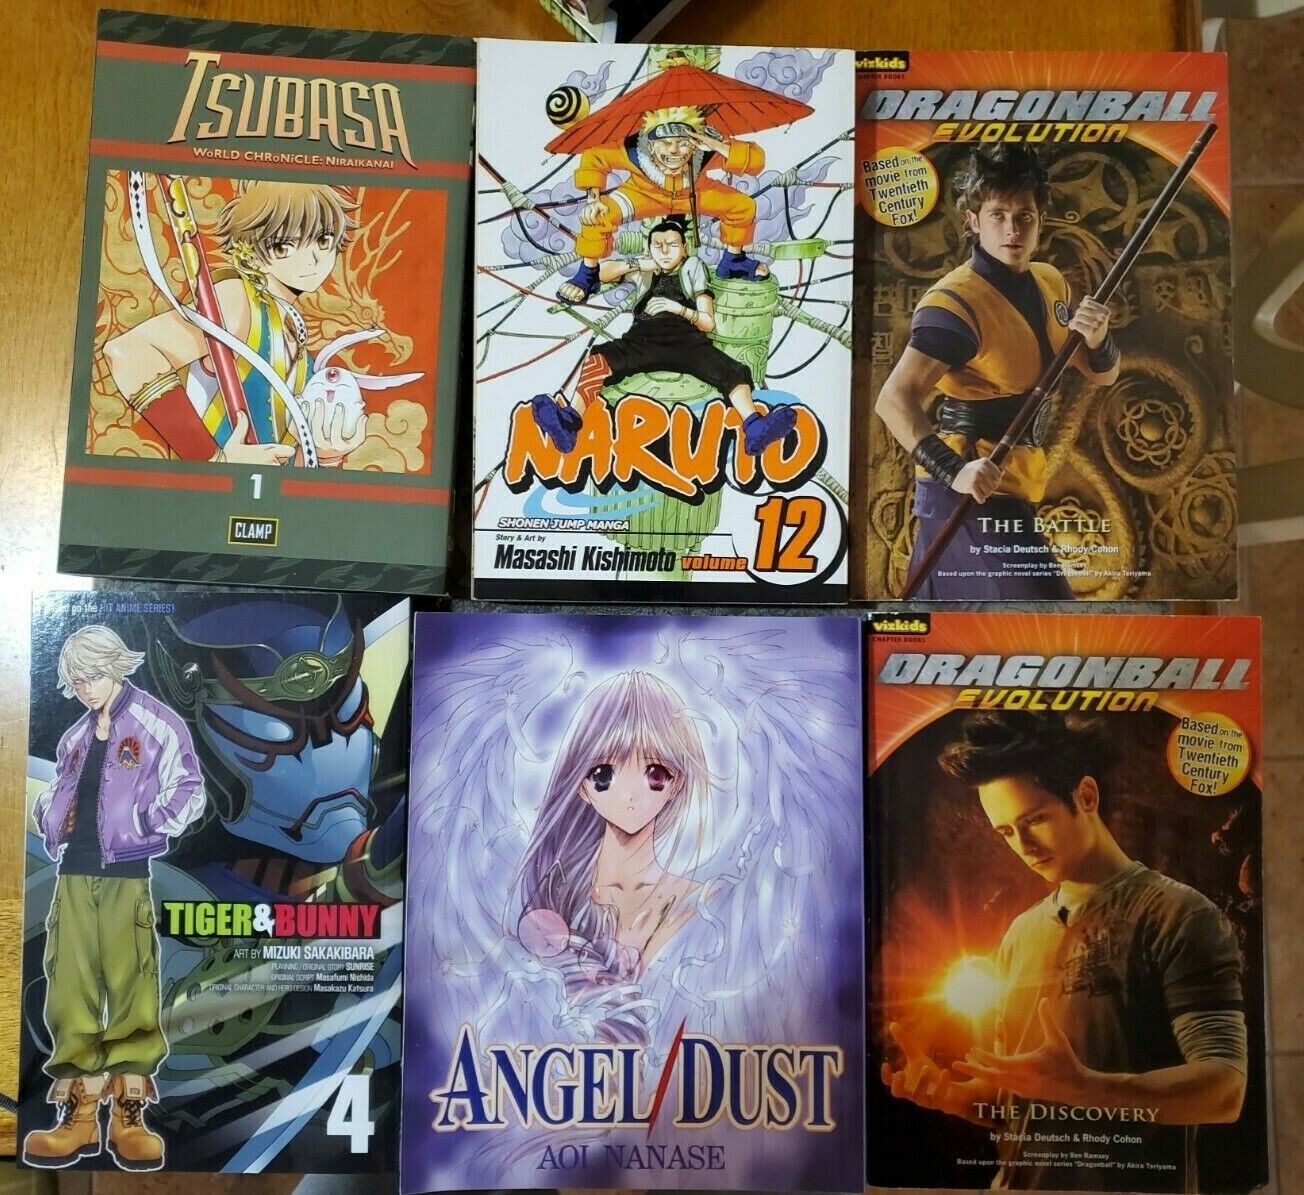 Manga Mixed Lot of 6 books-Tsubasa,Naruto,Tiger & Bunny,Dragonball Evolution NEW